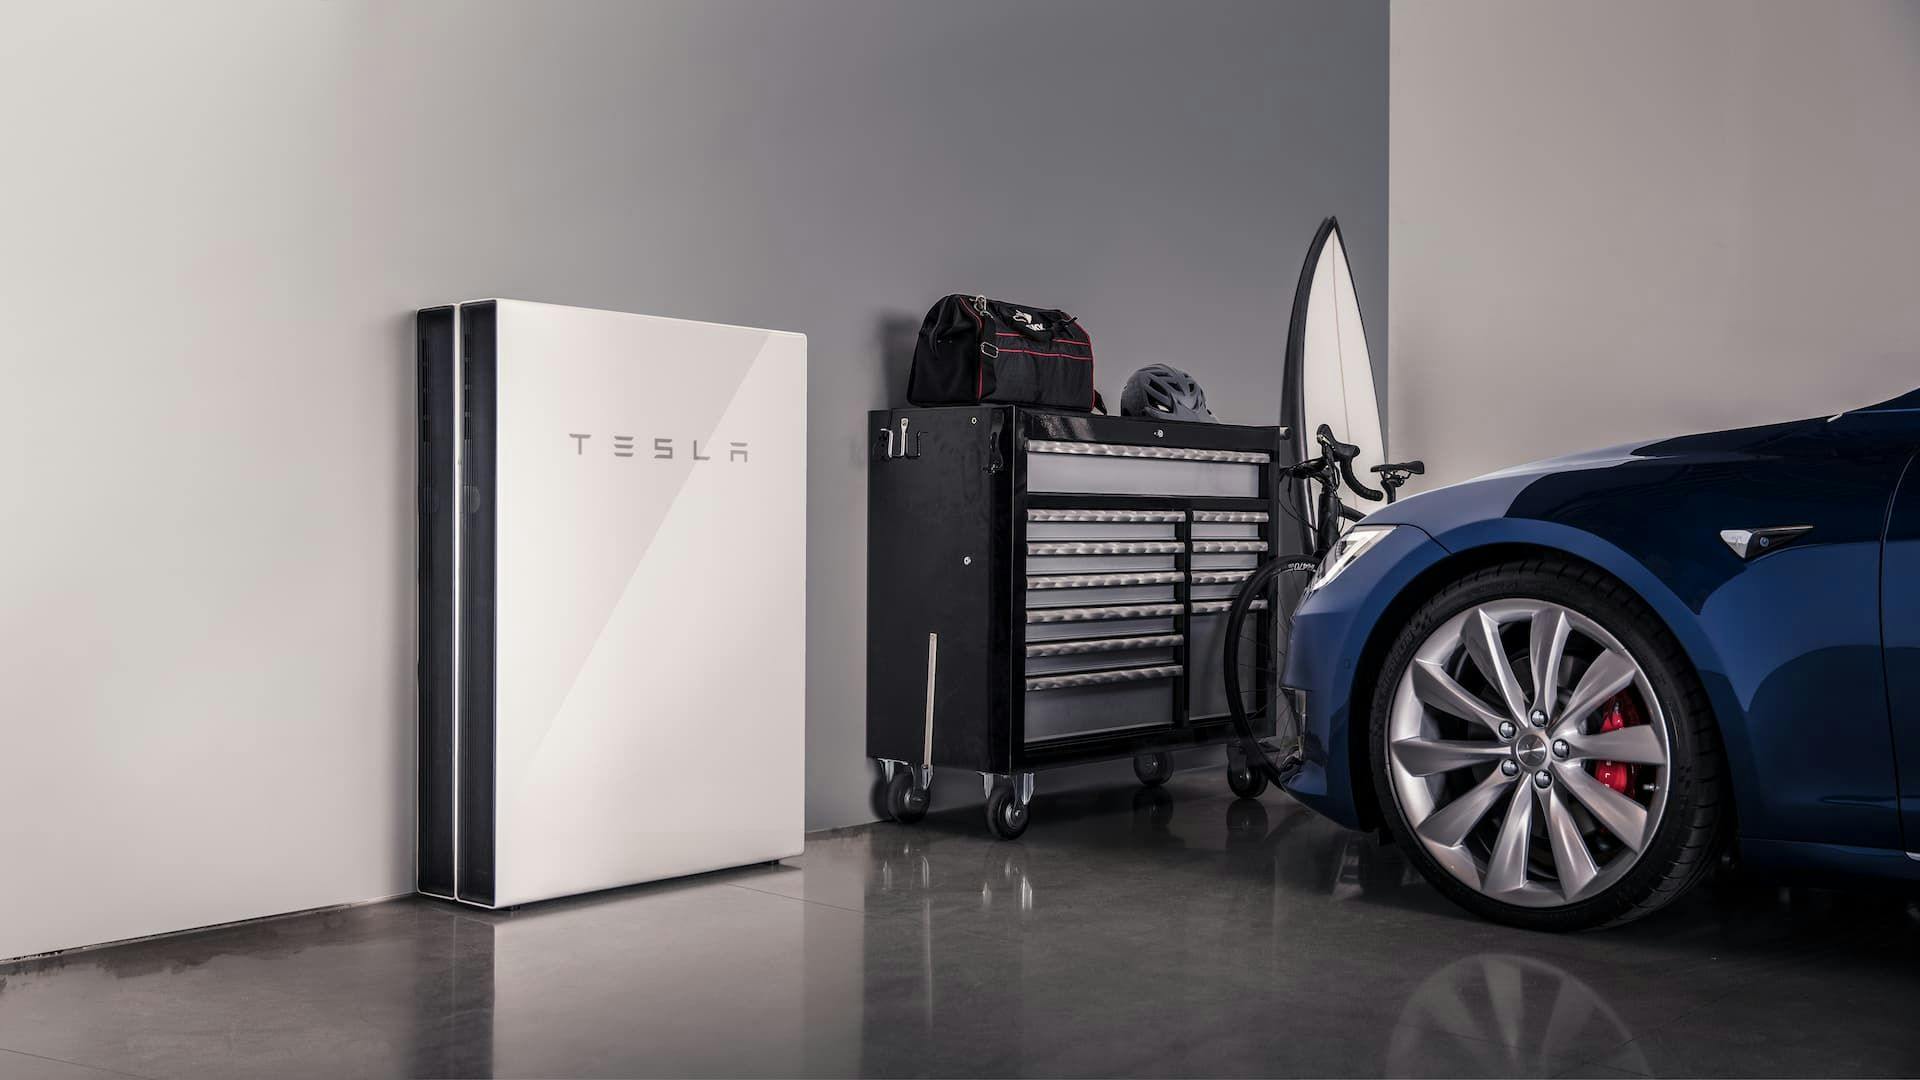 Tesla Powerwall 2 home battery next to Tesla Model S